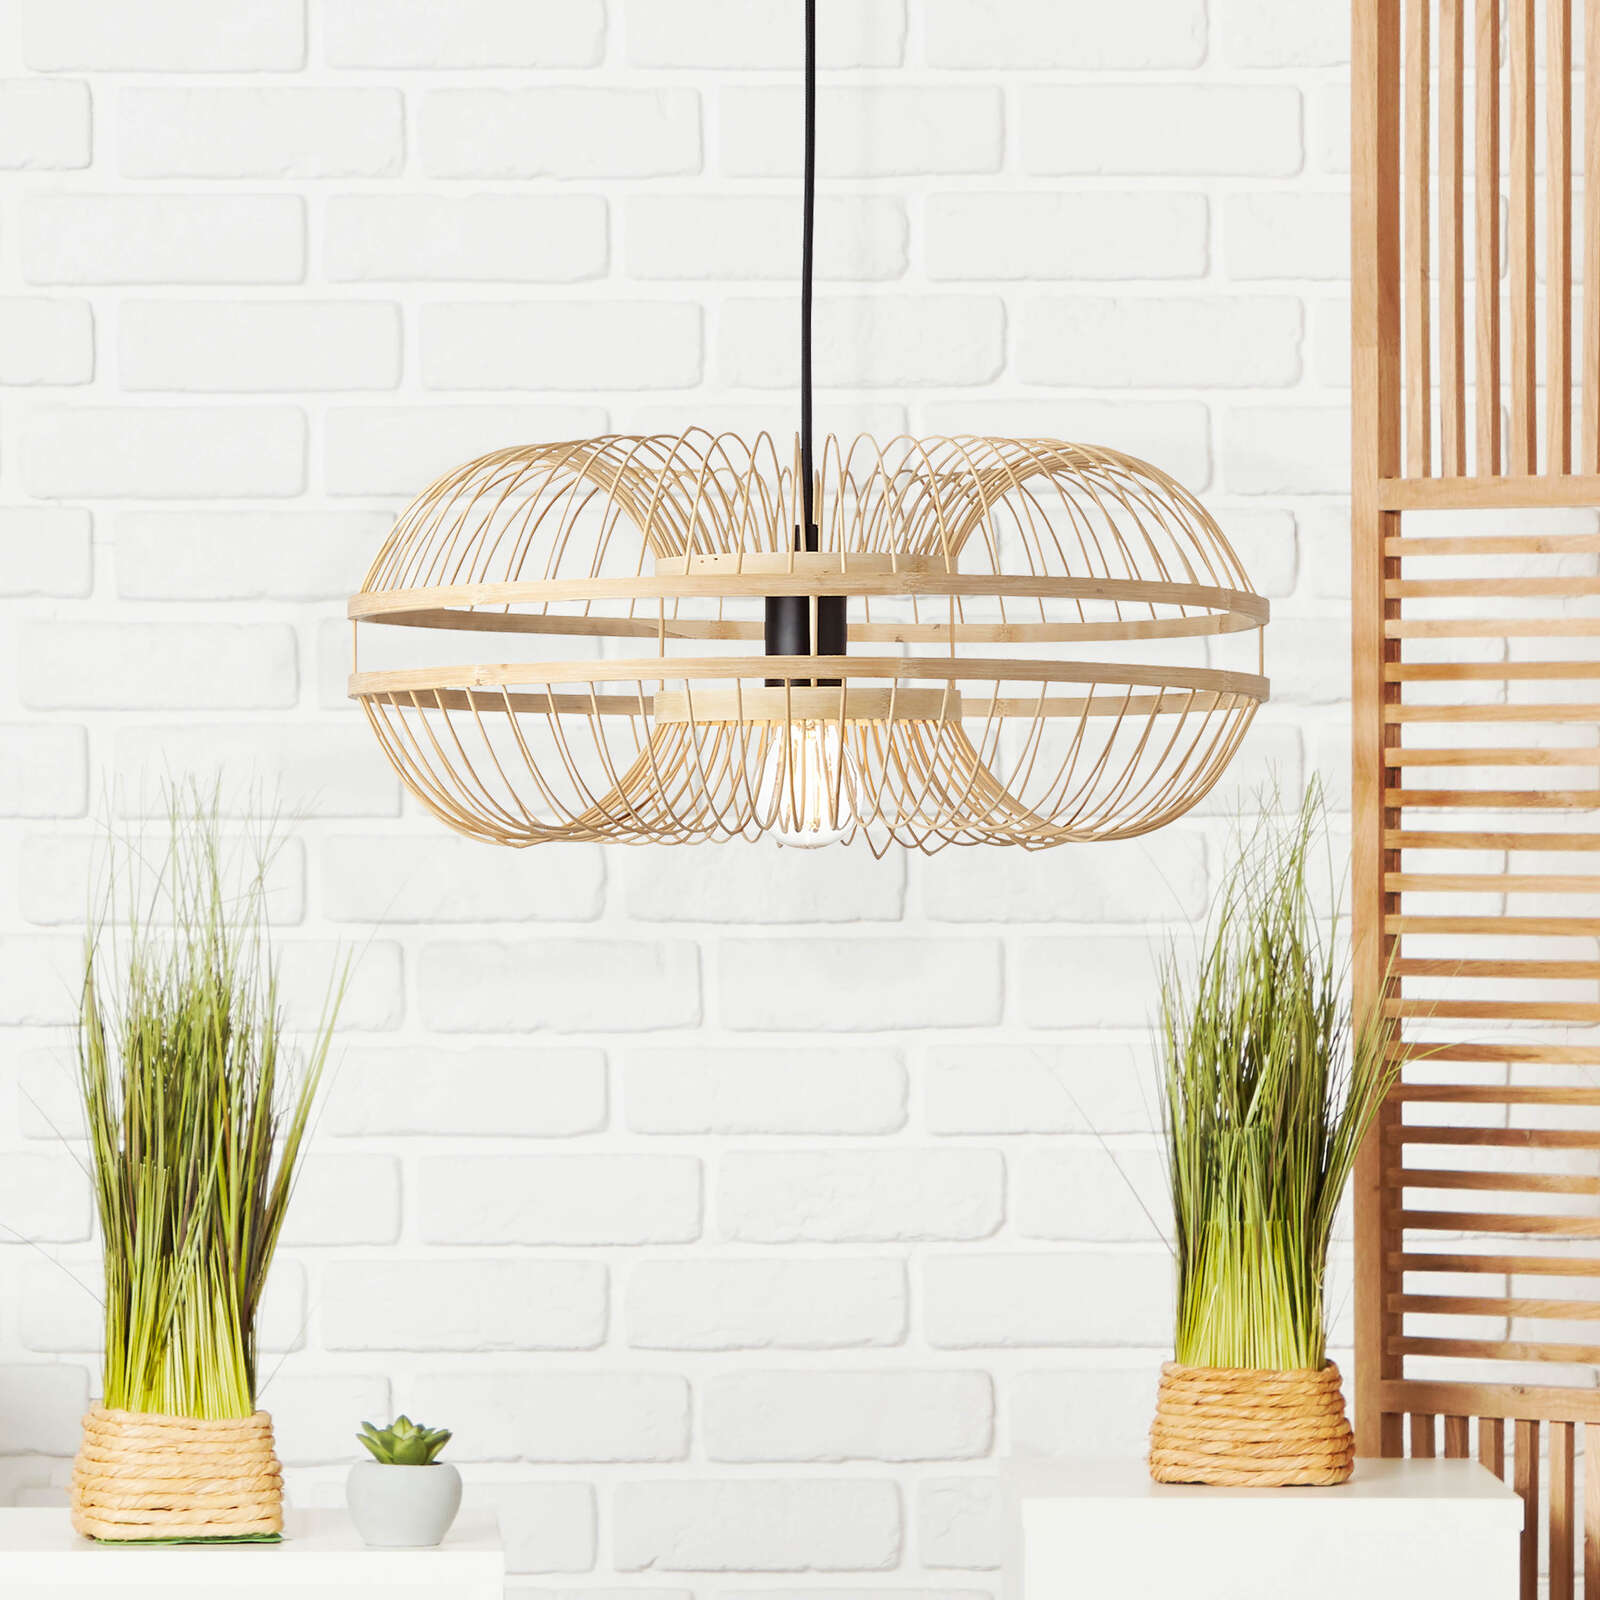             Bamboe hanglamp - Dana - Bruin
        